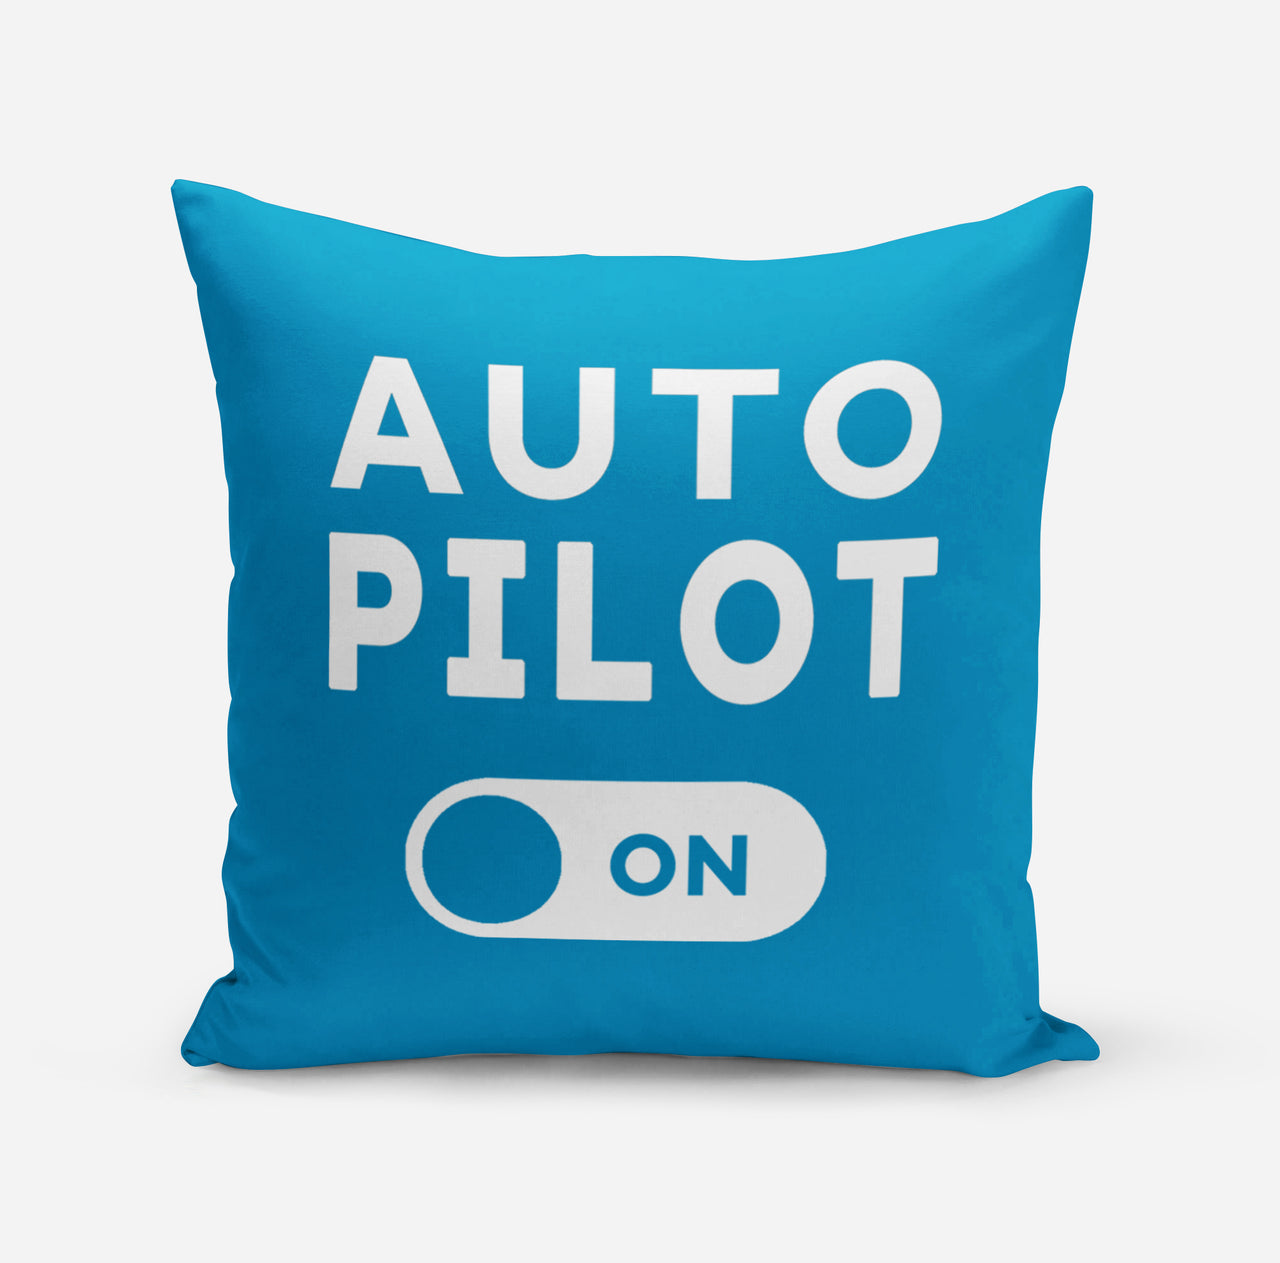 Auto Pilot ON Designed Pillows